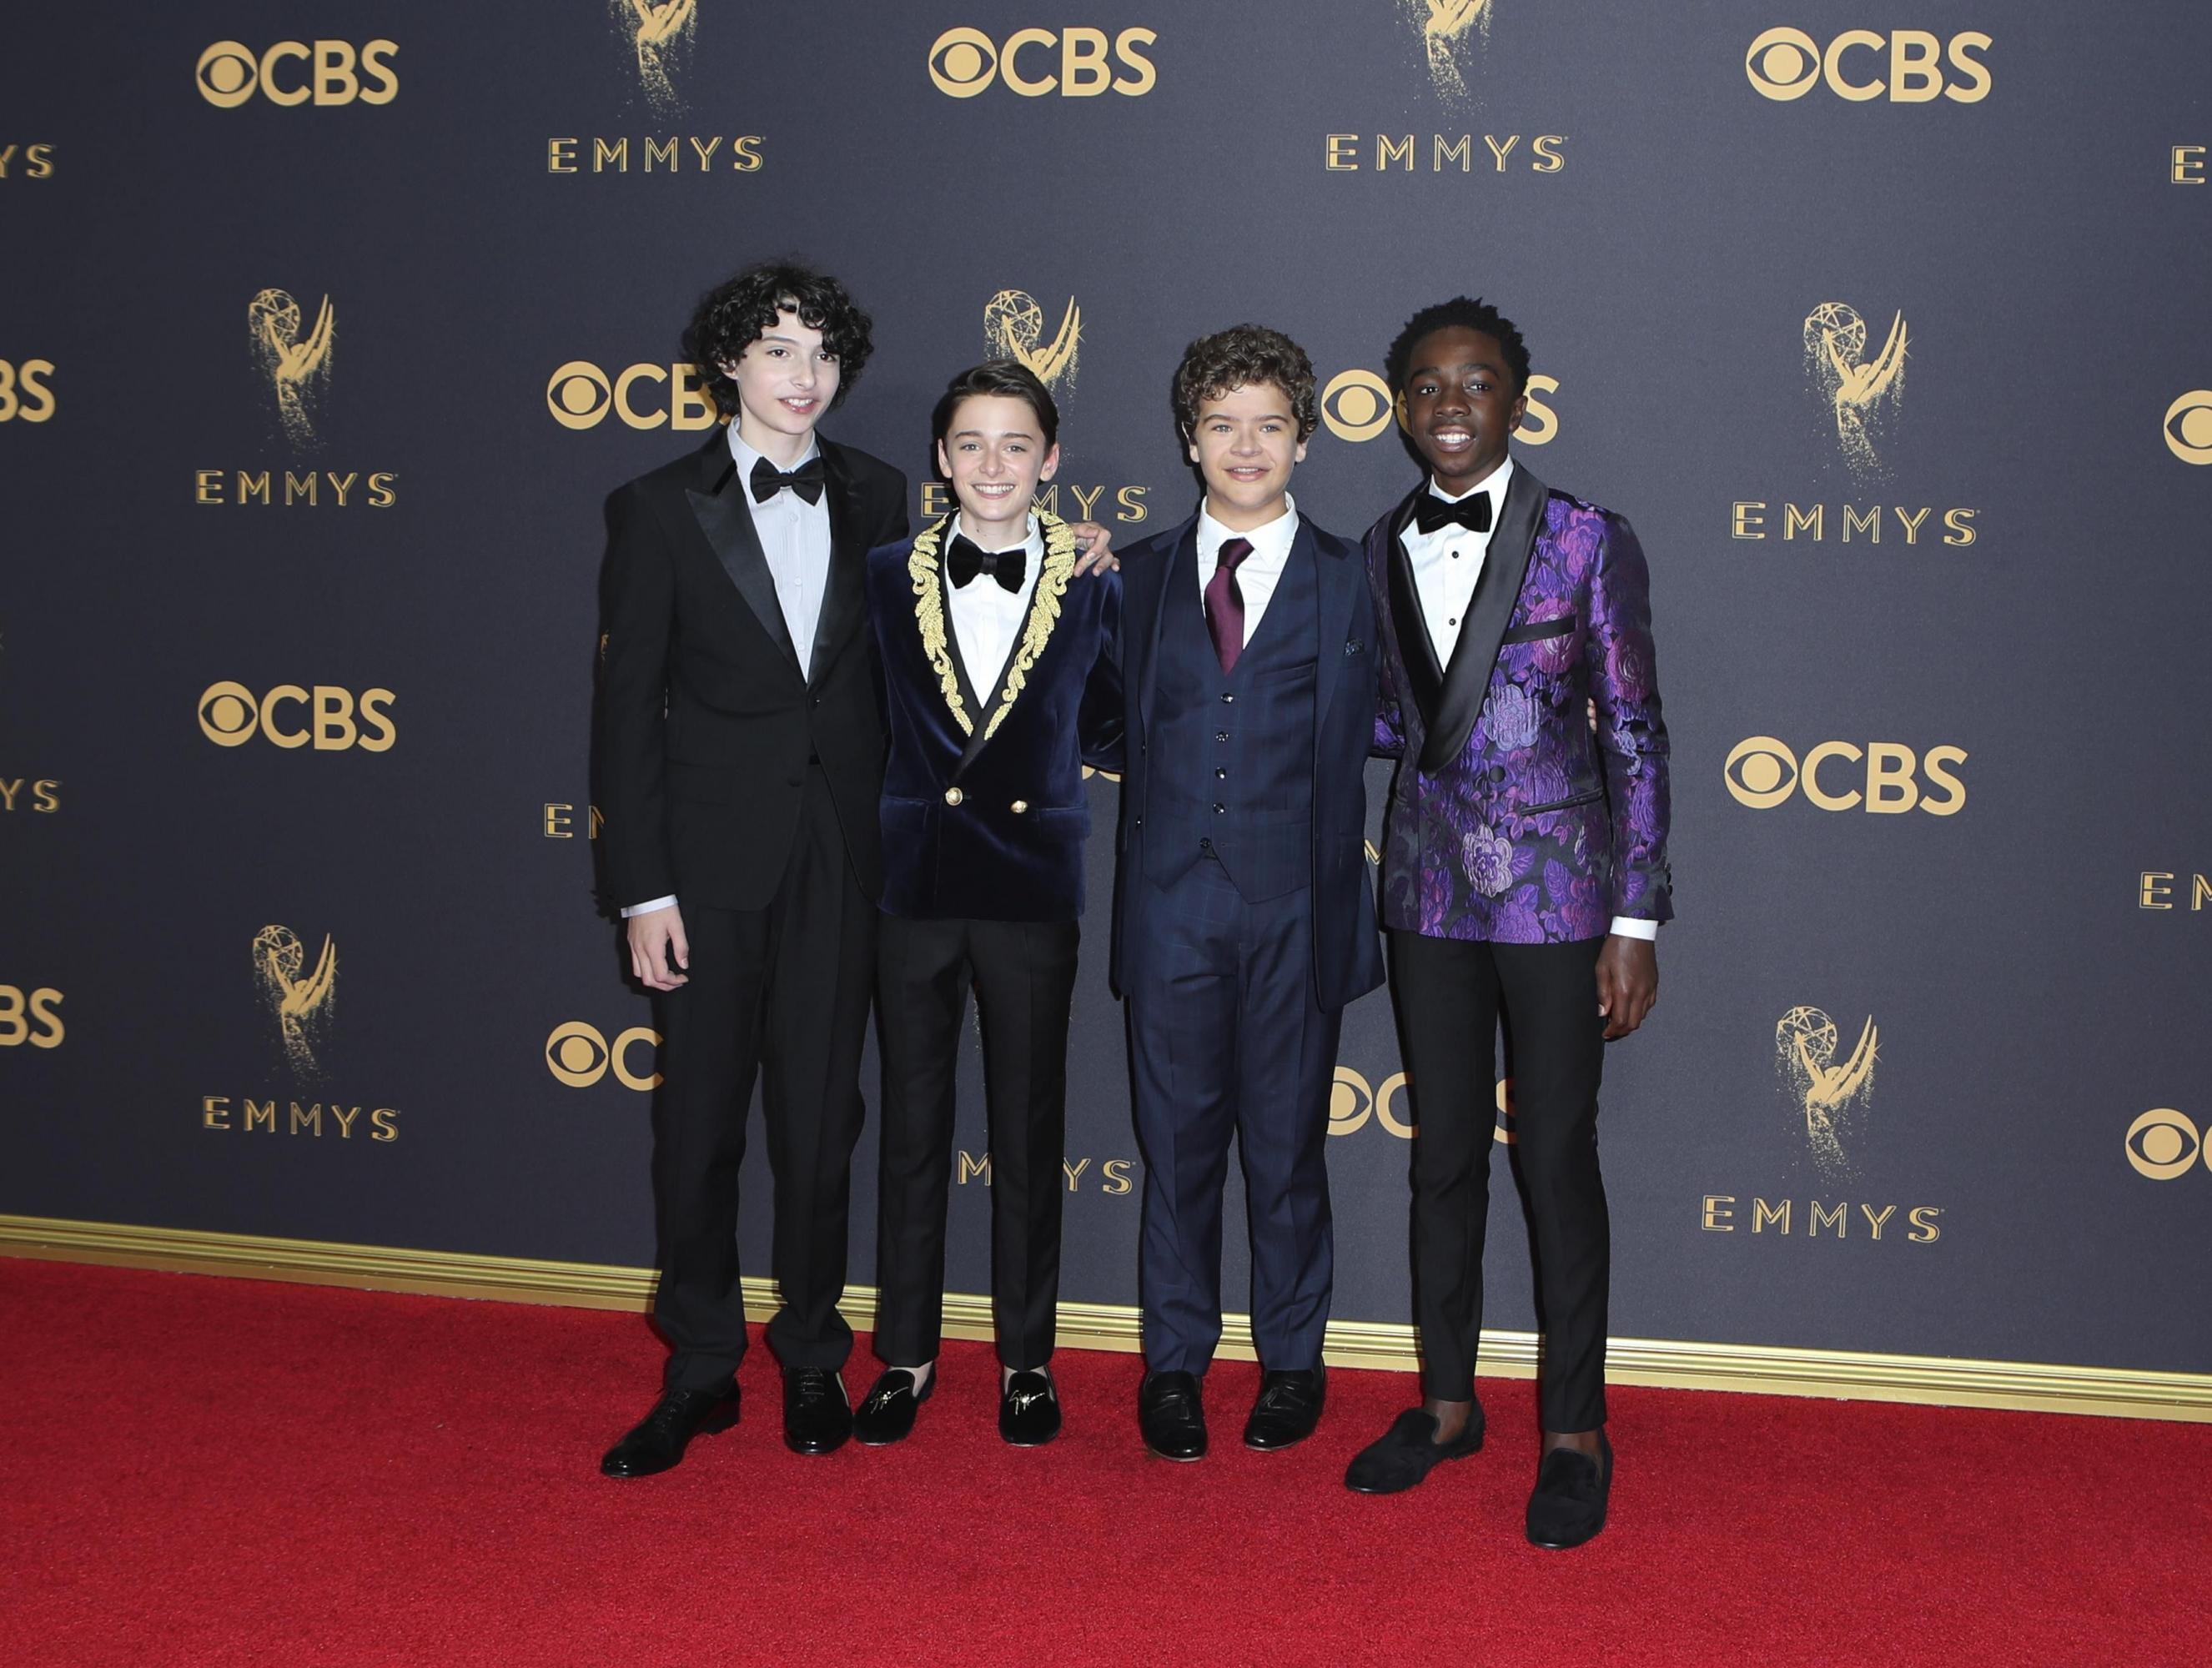 Emmy 2017: Actores de "Stranger Things se lucen en la alfombra roja [FOTOS]